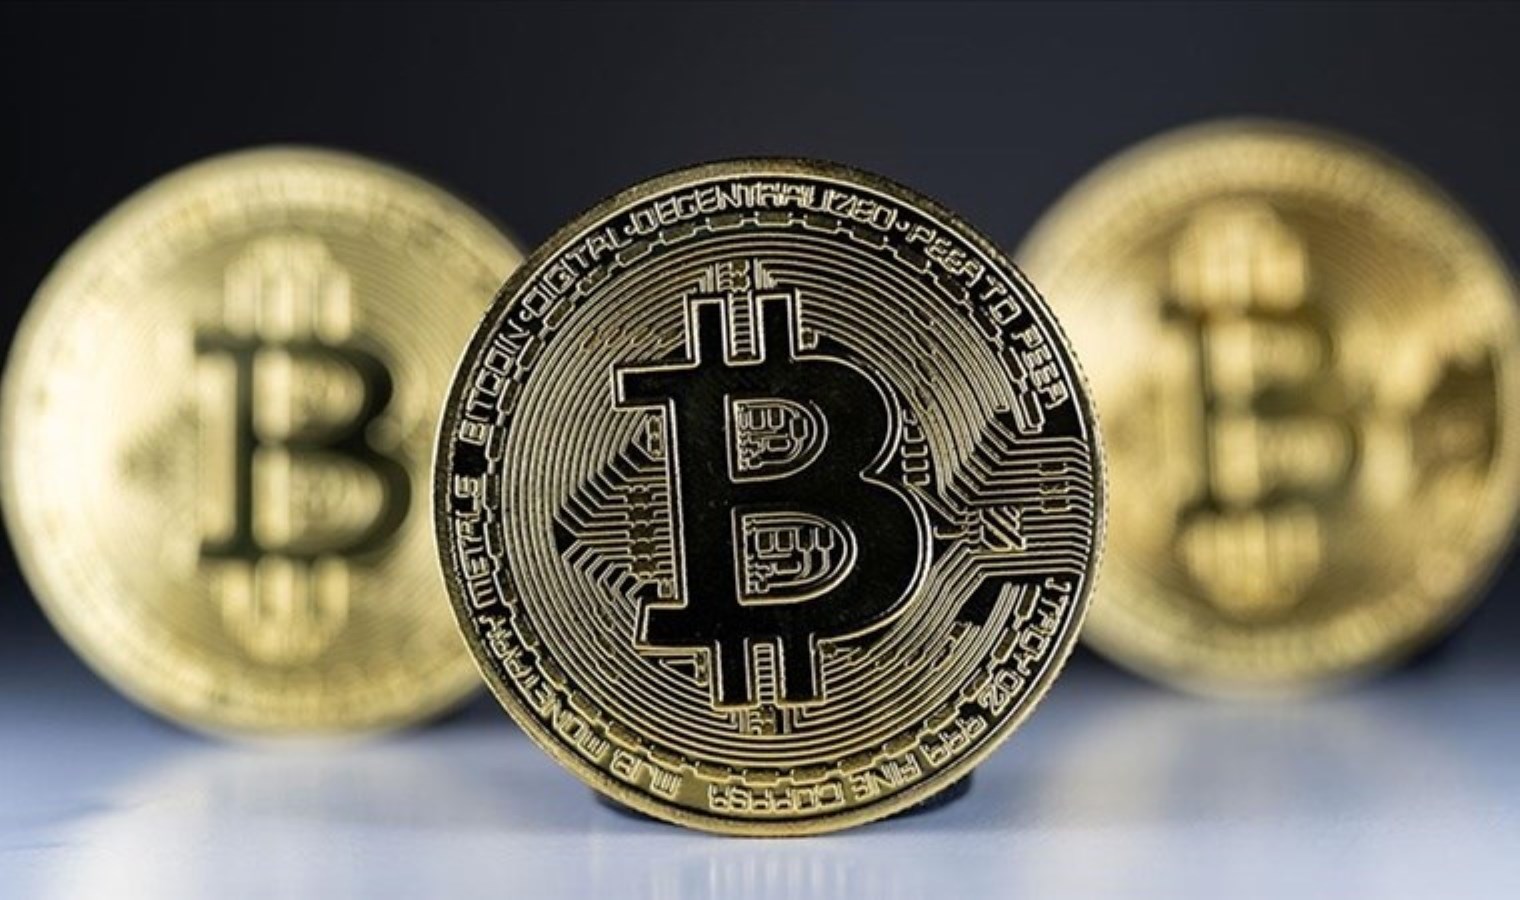 Bitcoin’in fiyatı 67 bin doları geçti